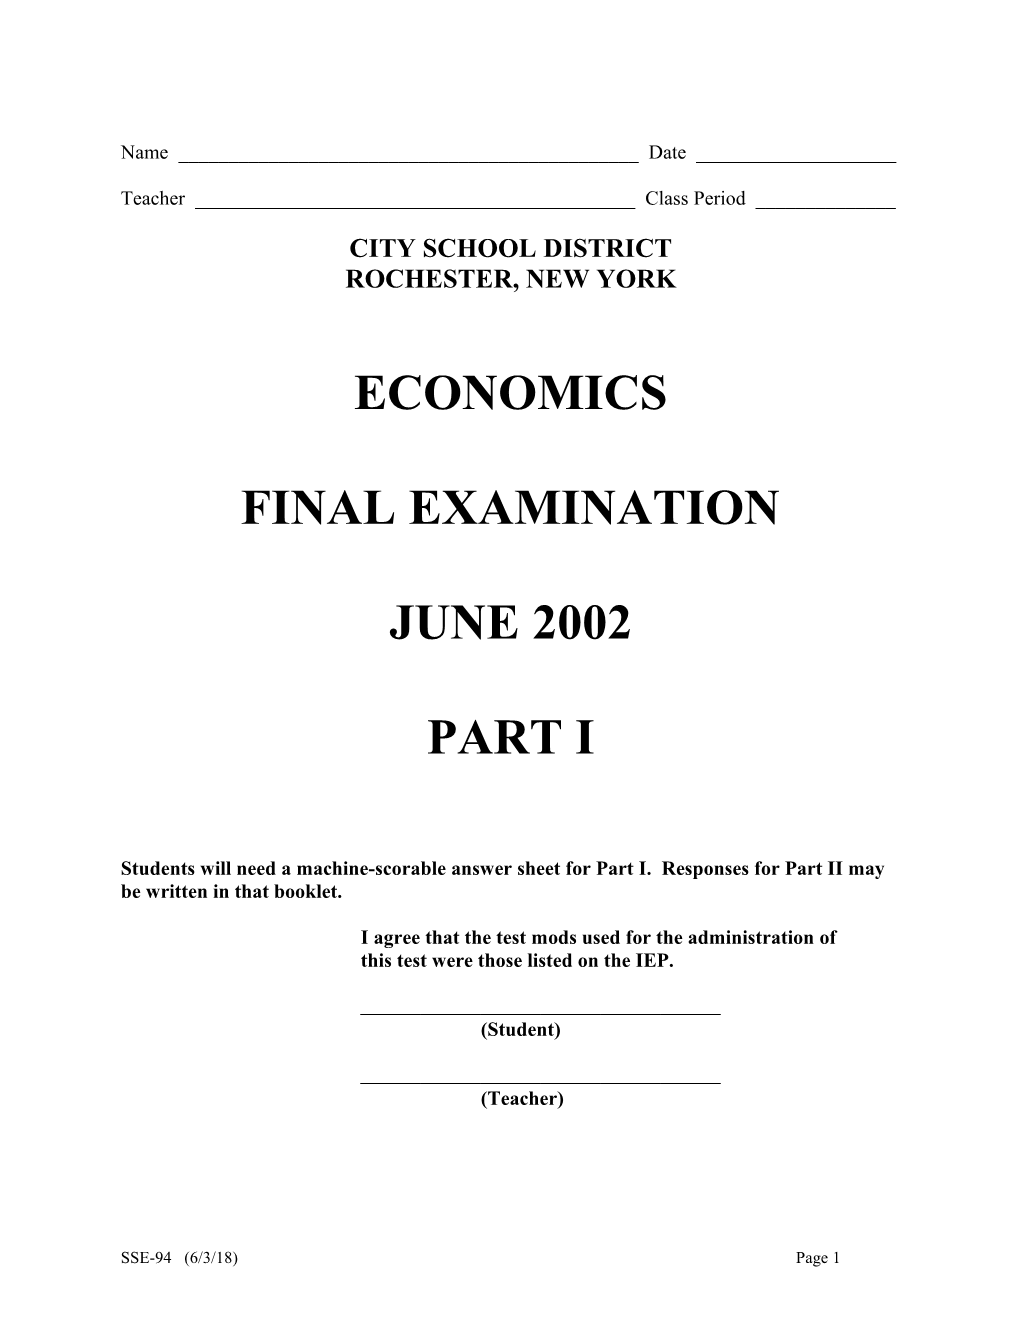 Final Examination June 2002